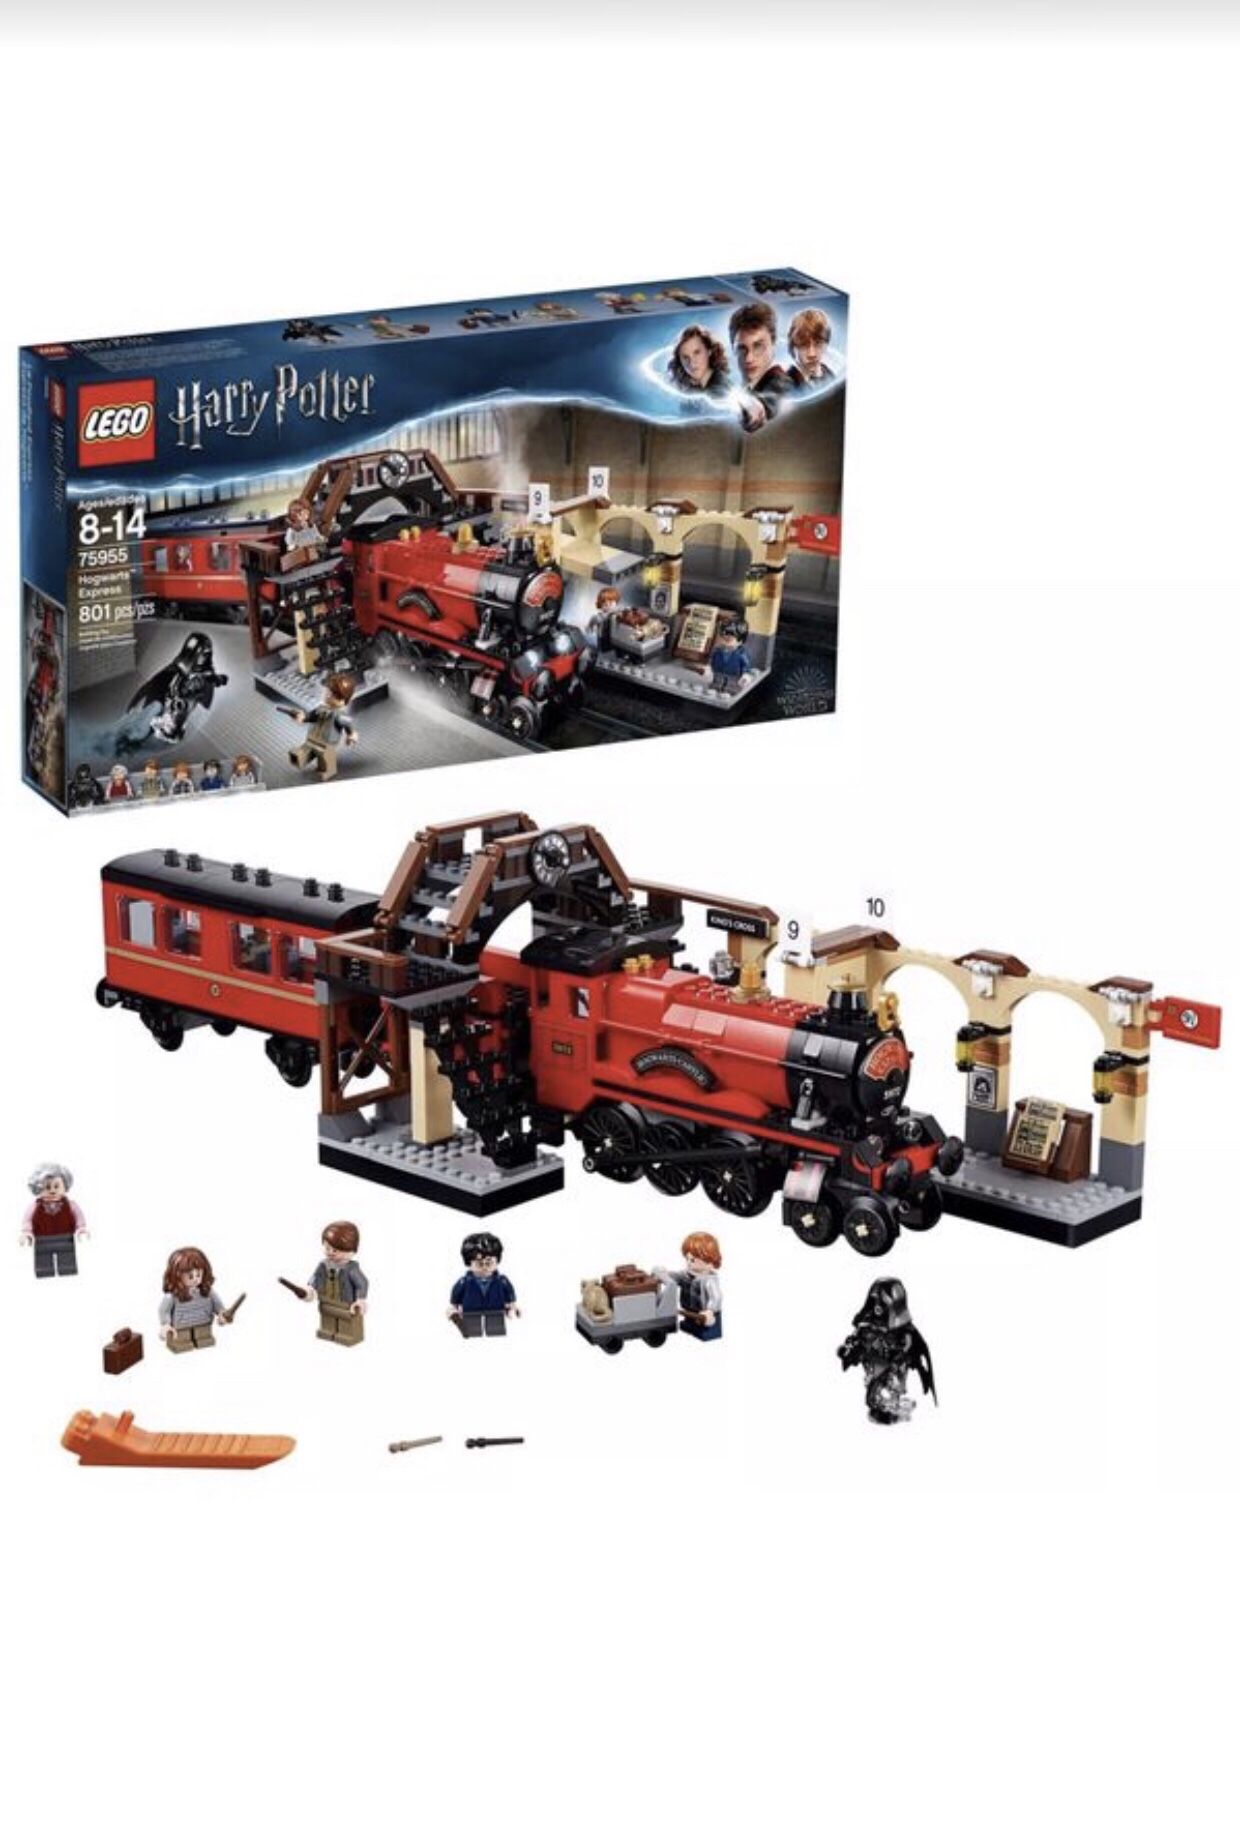 LEGO Harry Potter Hogwarts Express Set 75955 2018 Set New In Box